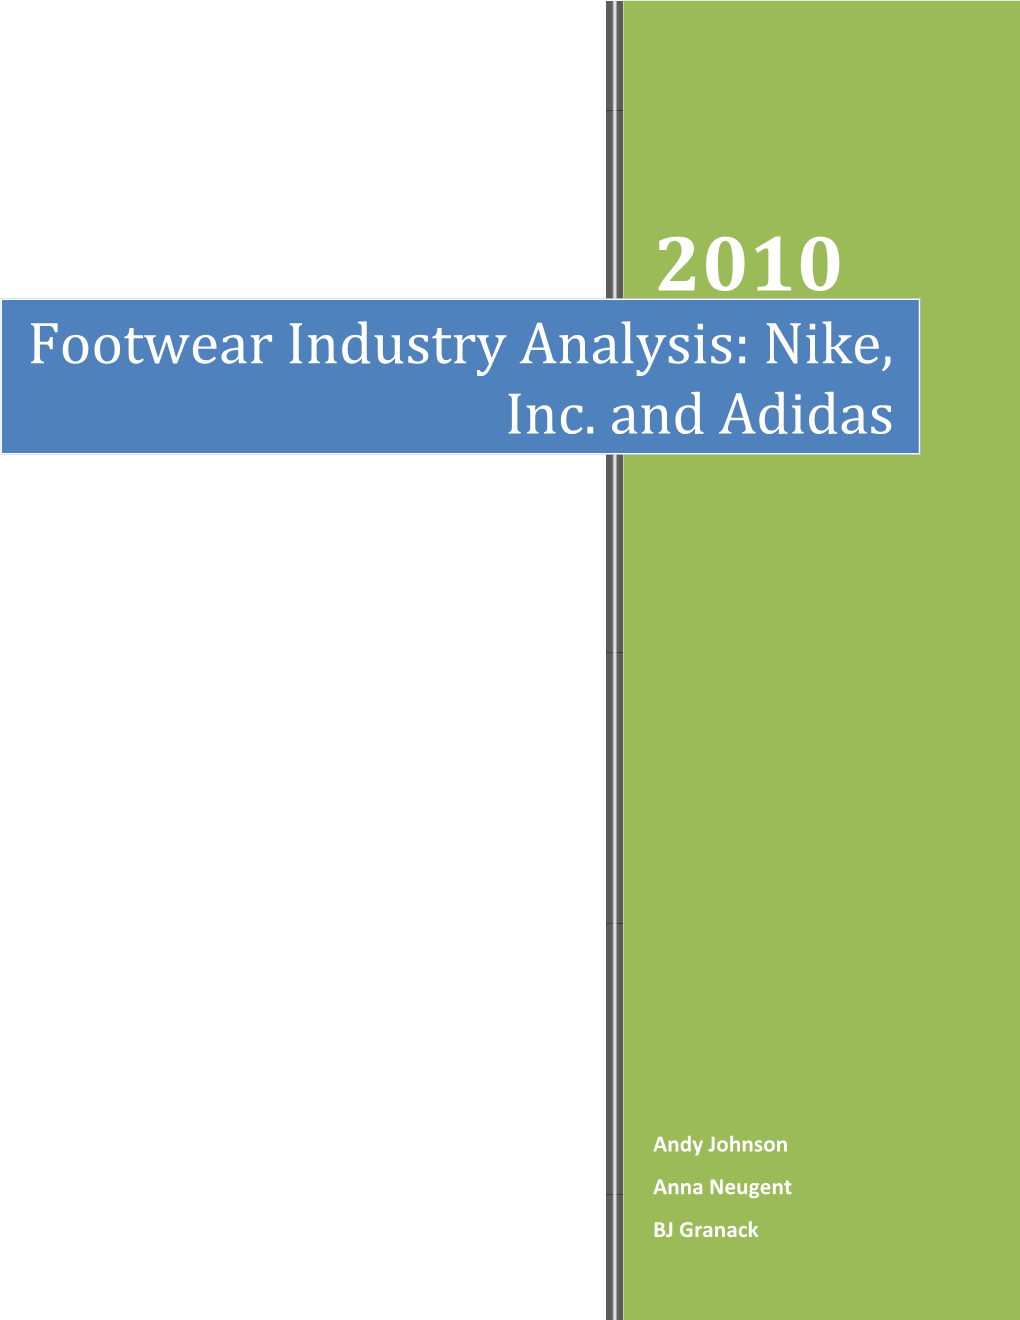 Footwear Industry Analysis: Nike, Inc. And Adidas